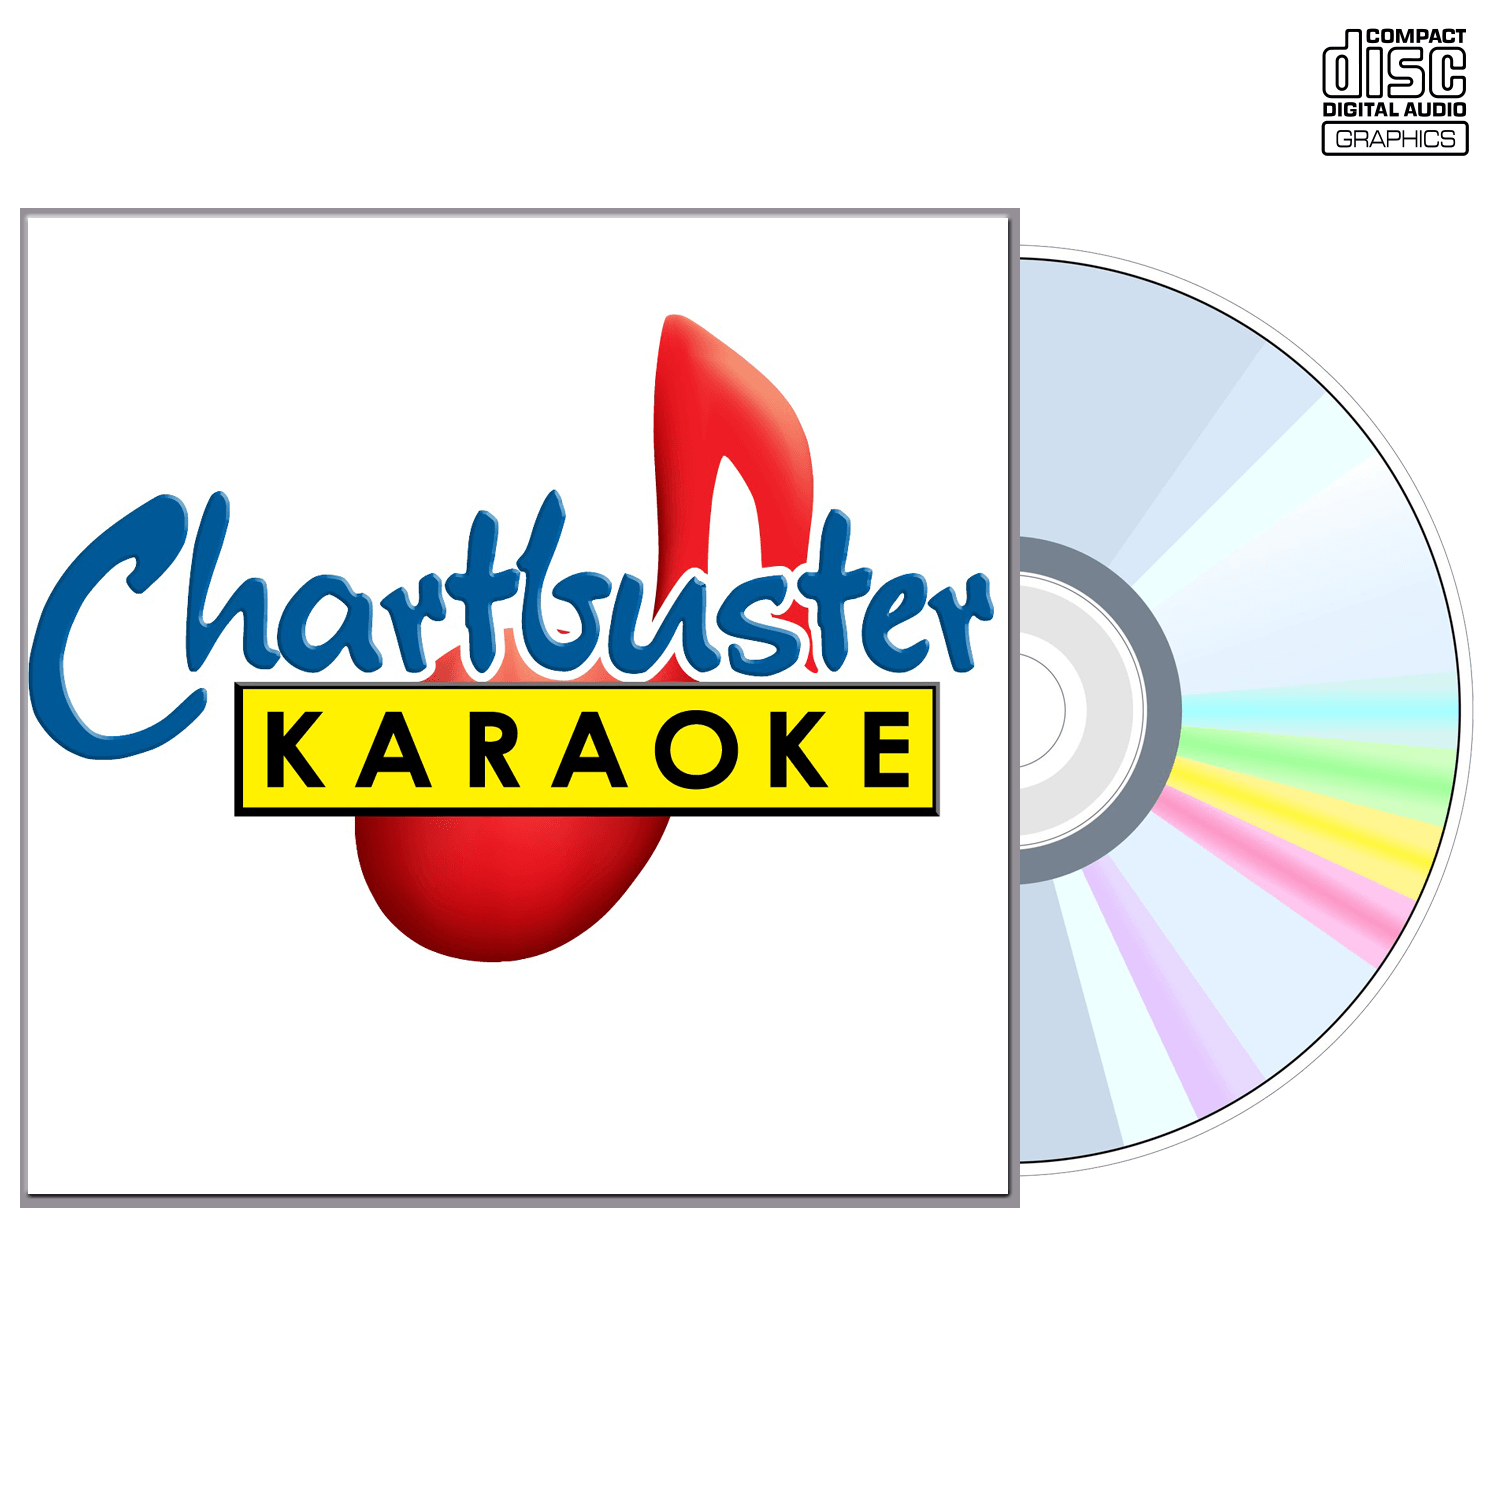 Keith Urban Vol 1 - CD+G - Chartbuster Karaoke - Karaoke Home Entertainment